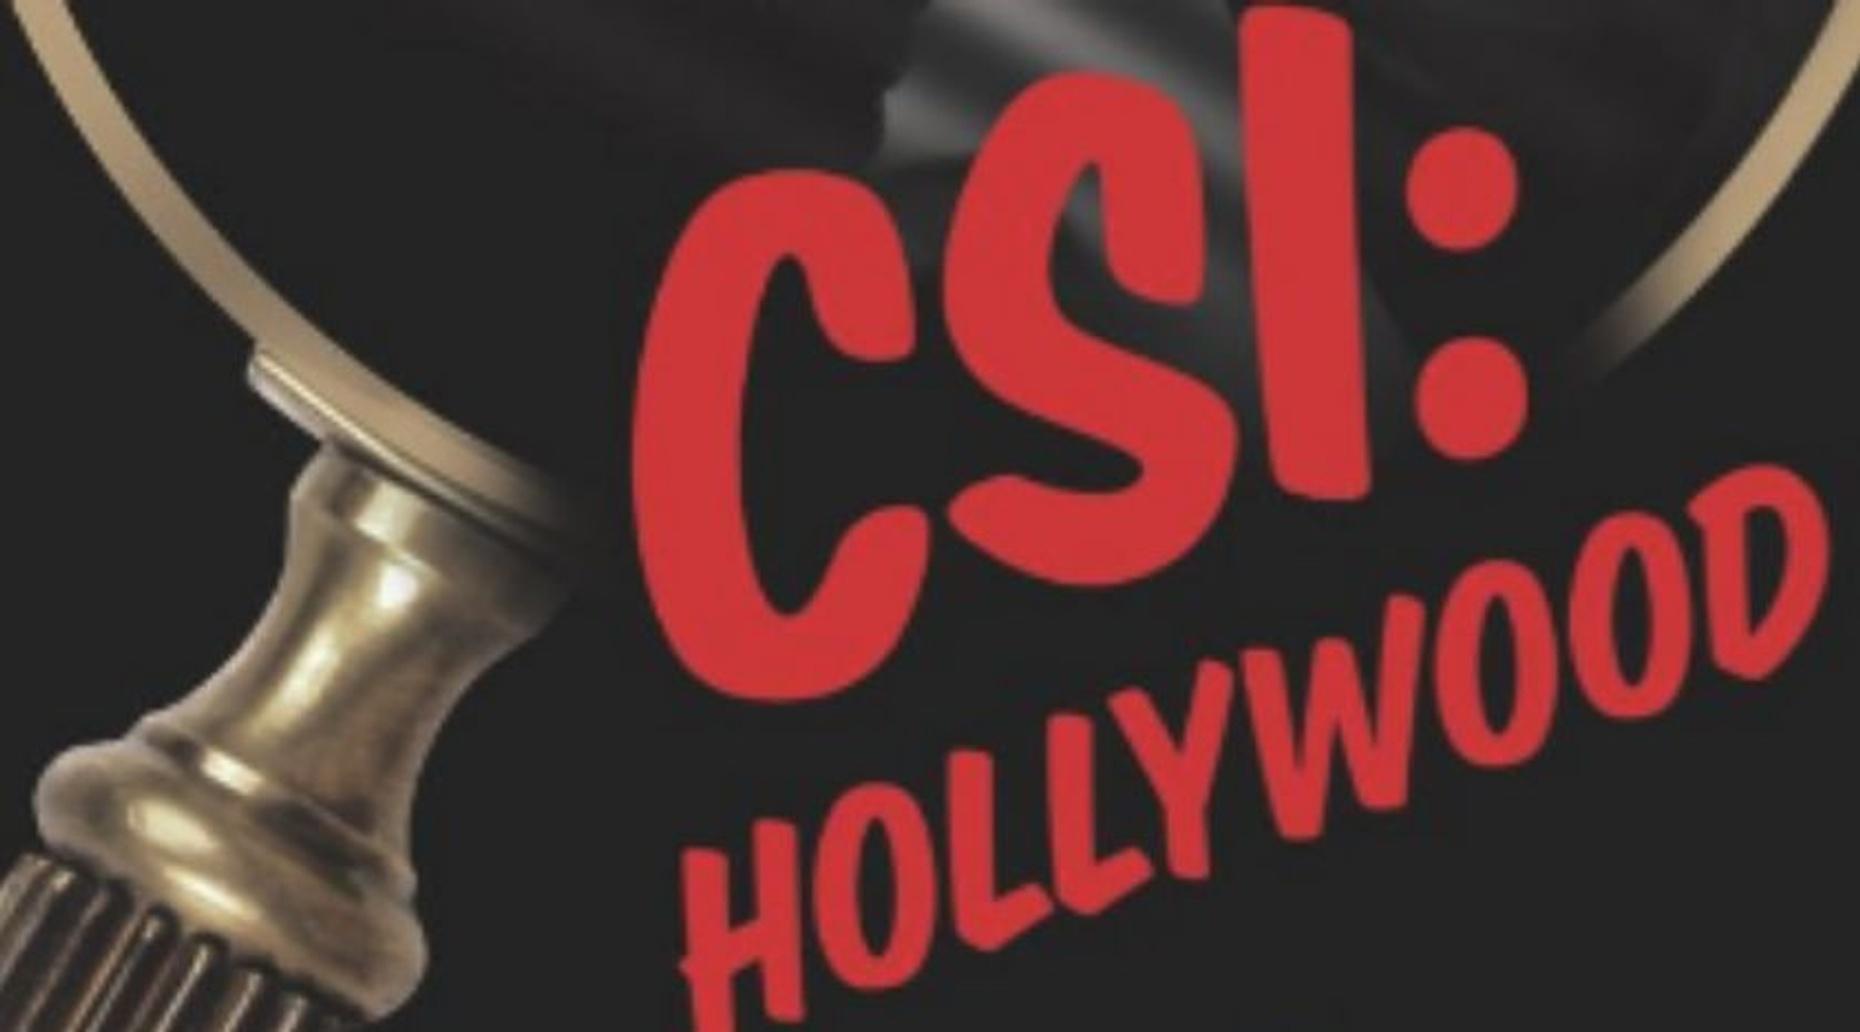 CSI: Hollywood